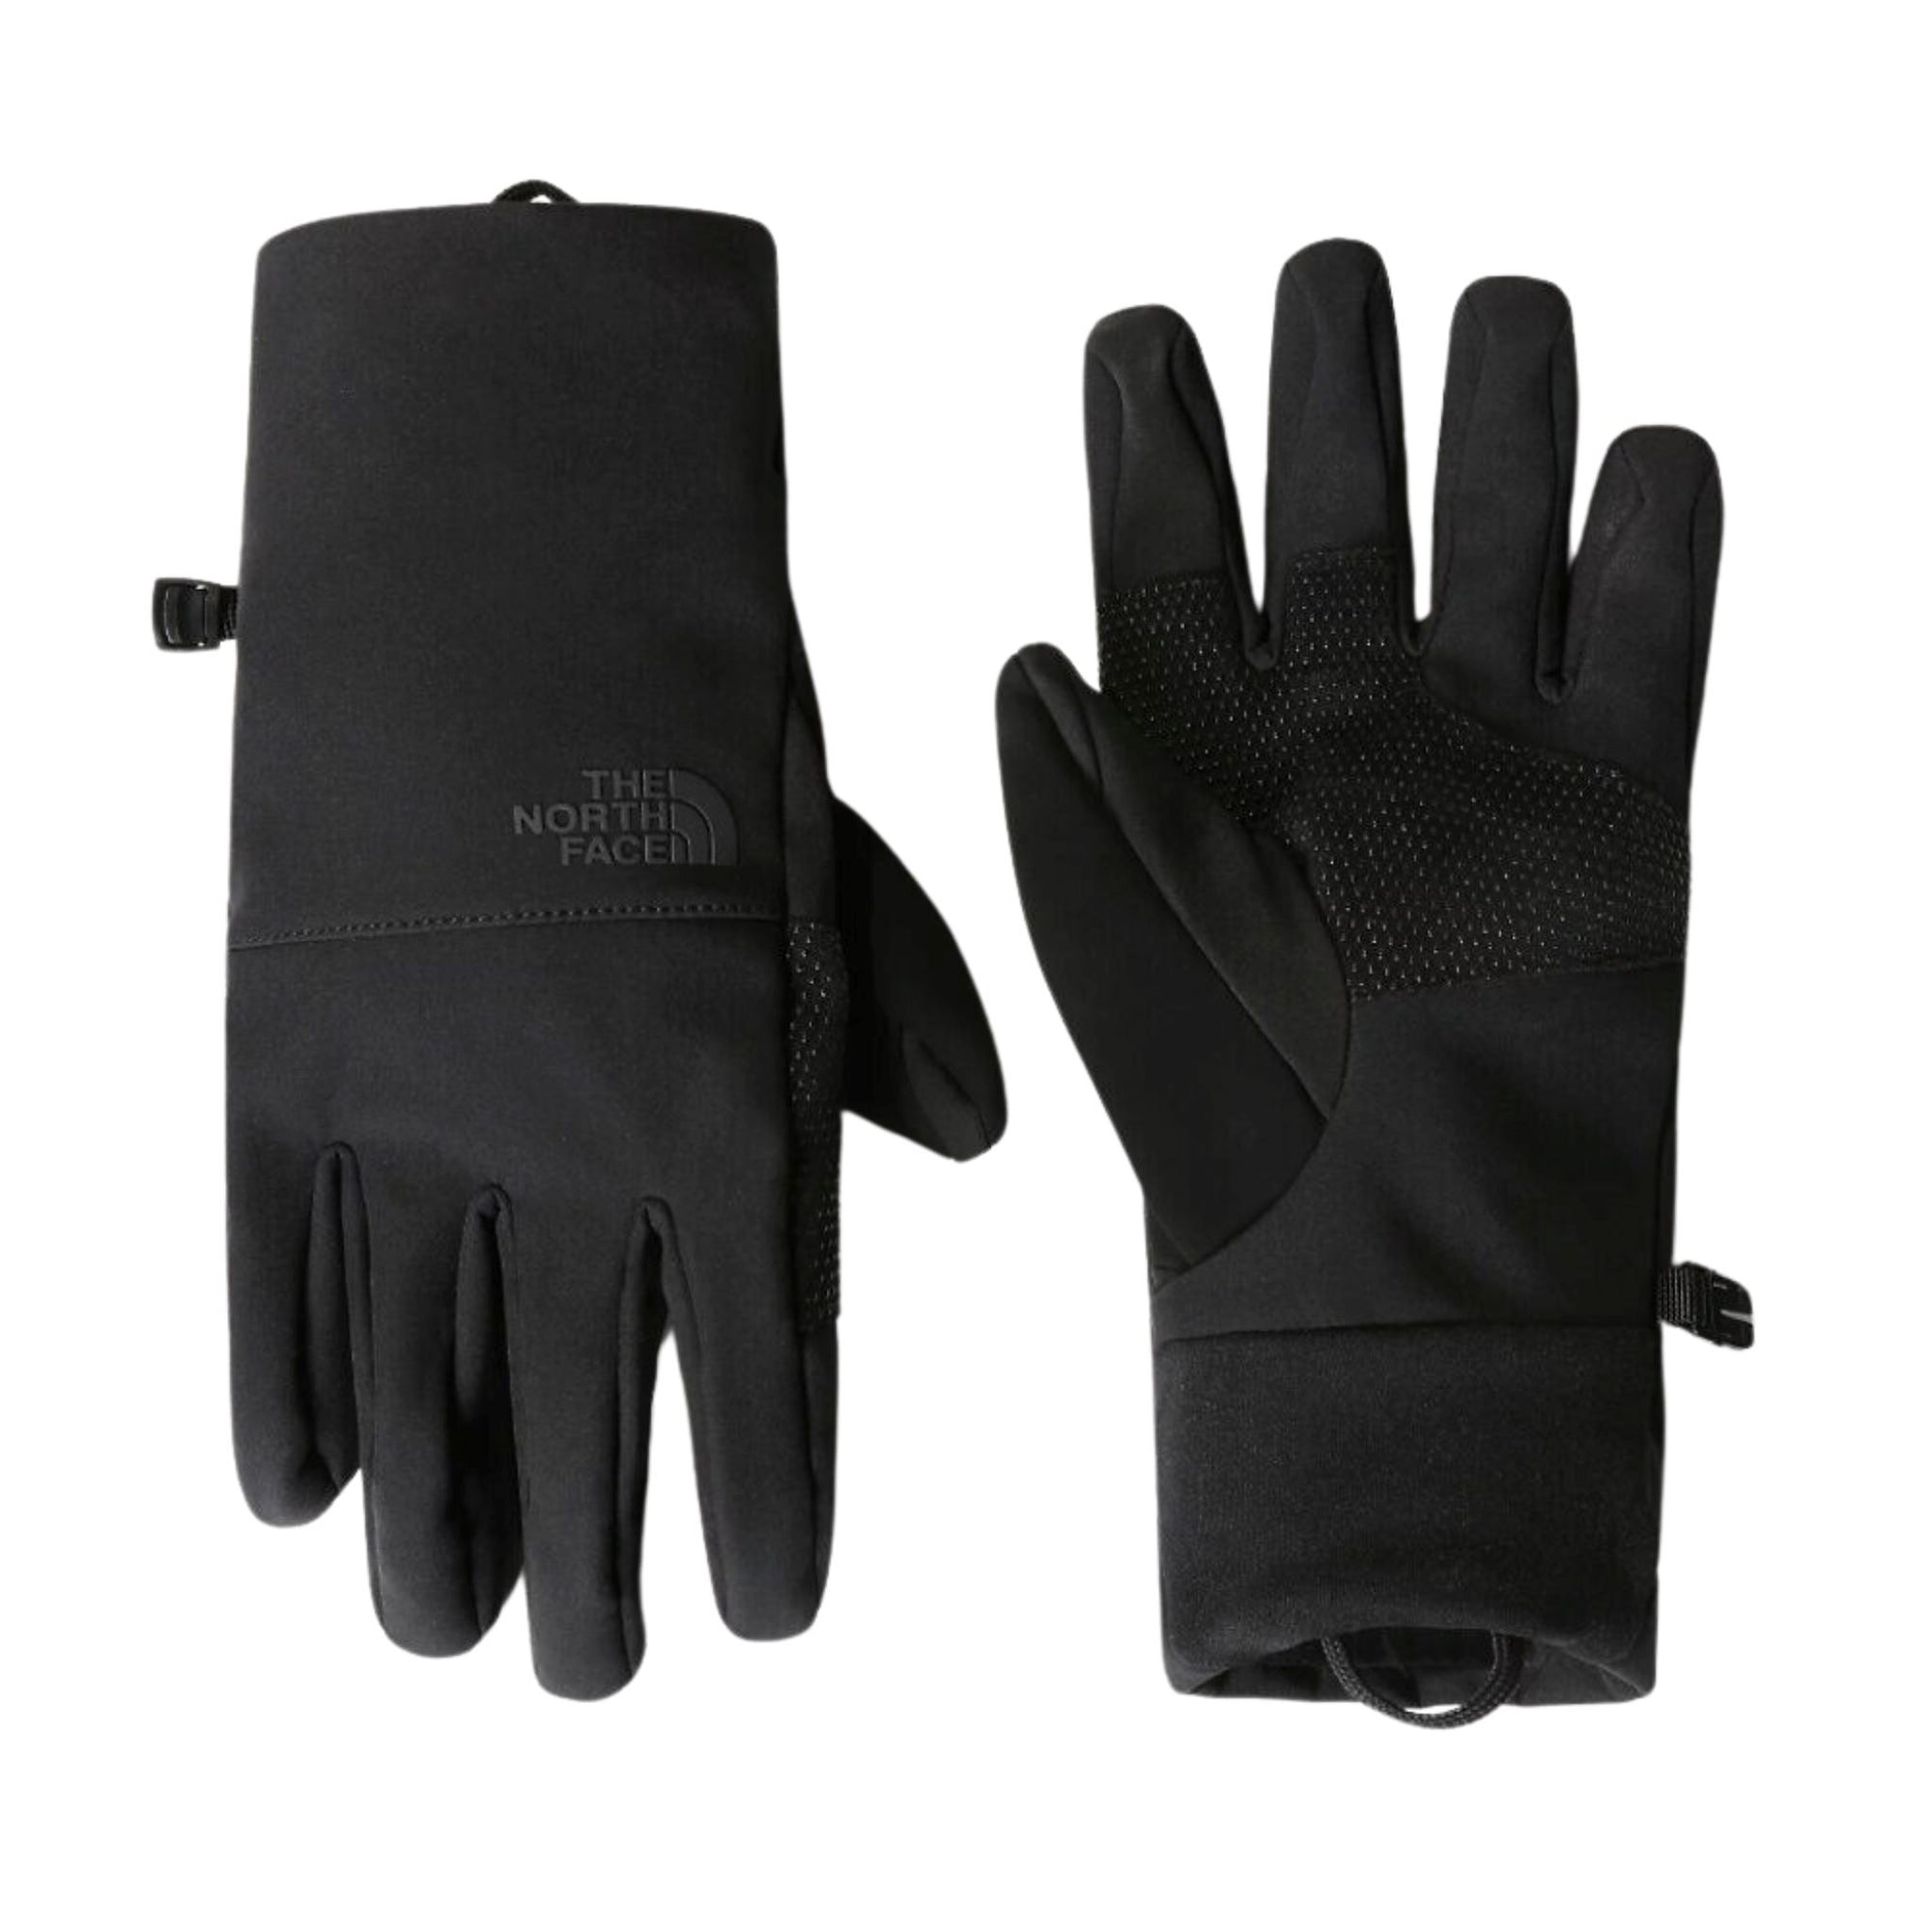 Mens The North Face Apex E-Tip Glove - Black Gloves The North Face M INTL / M AU 